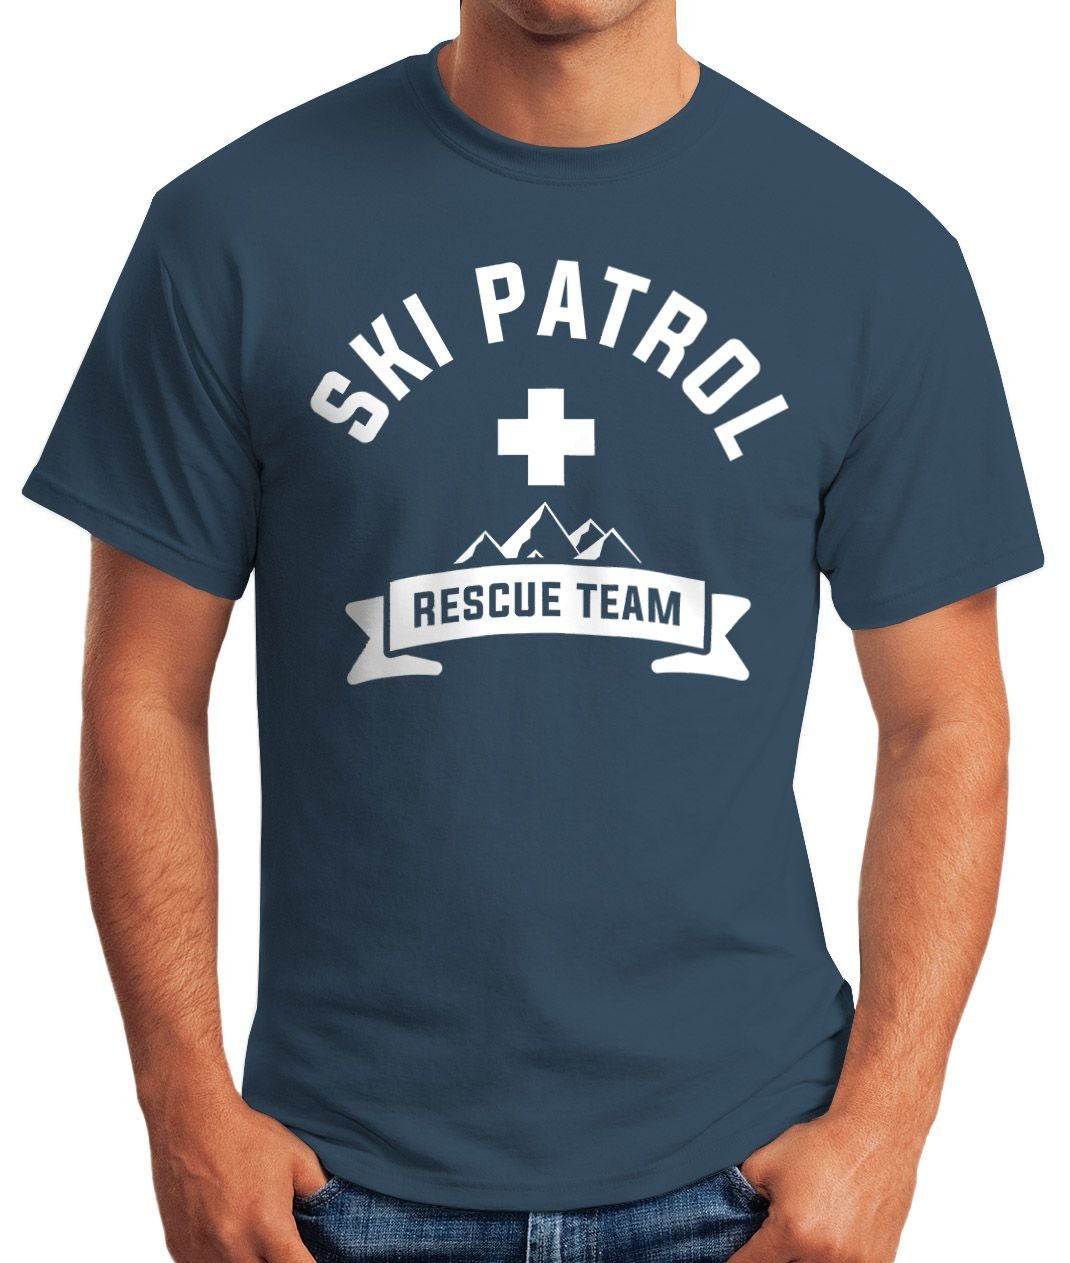 Print-Shirt Apres-Ski Patrol Fun-Shirt Herren Moonworks® blau Print Team MoonWorks Rescue mit T-Shirt